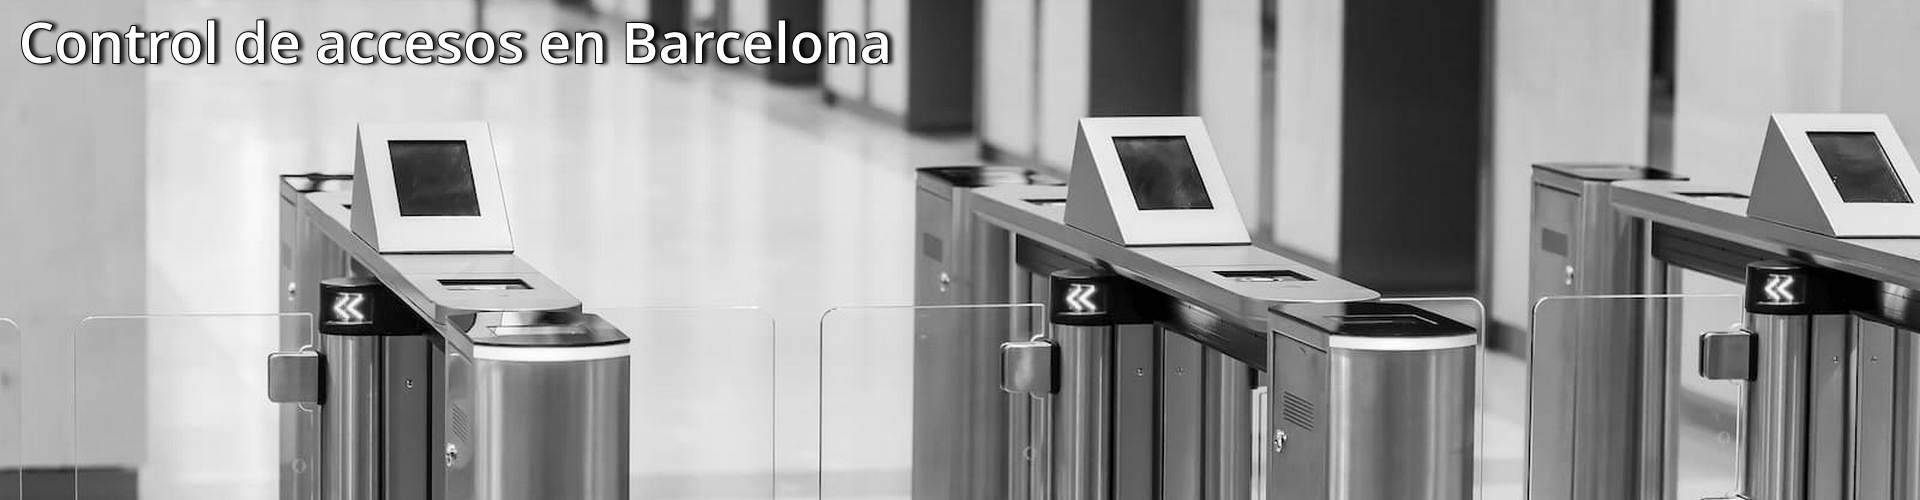 Control de accesos en Barcelona